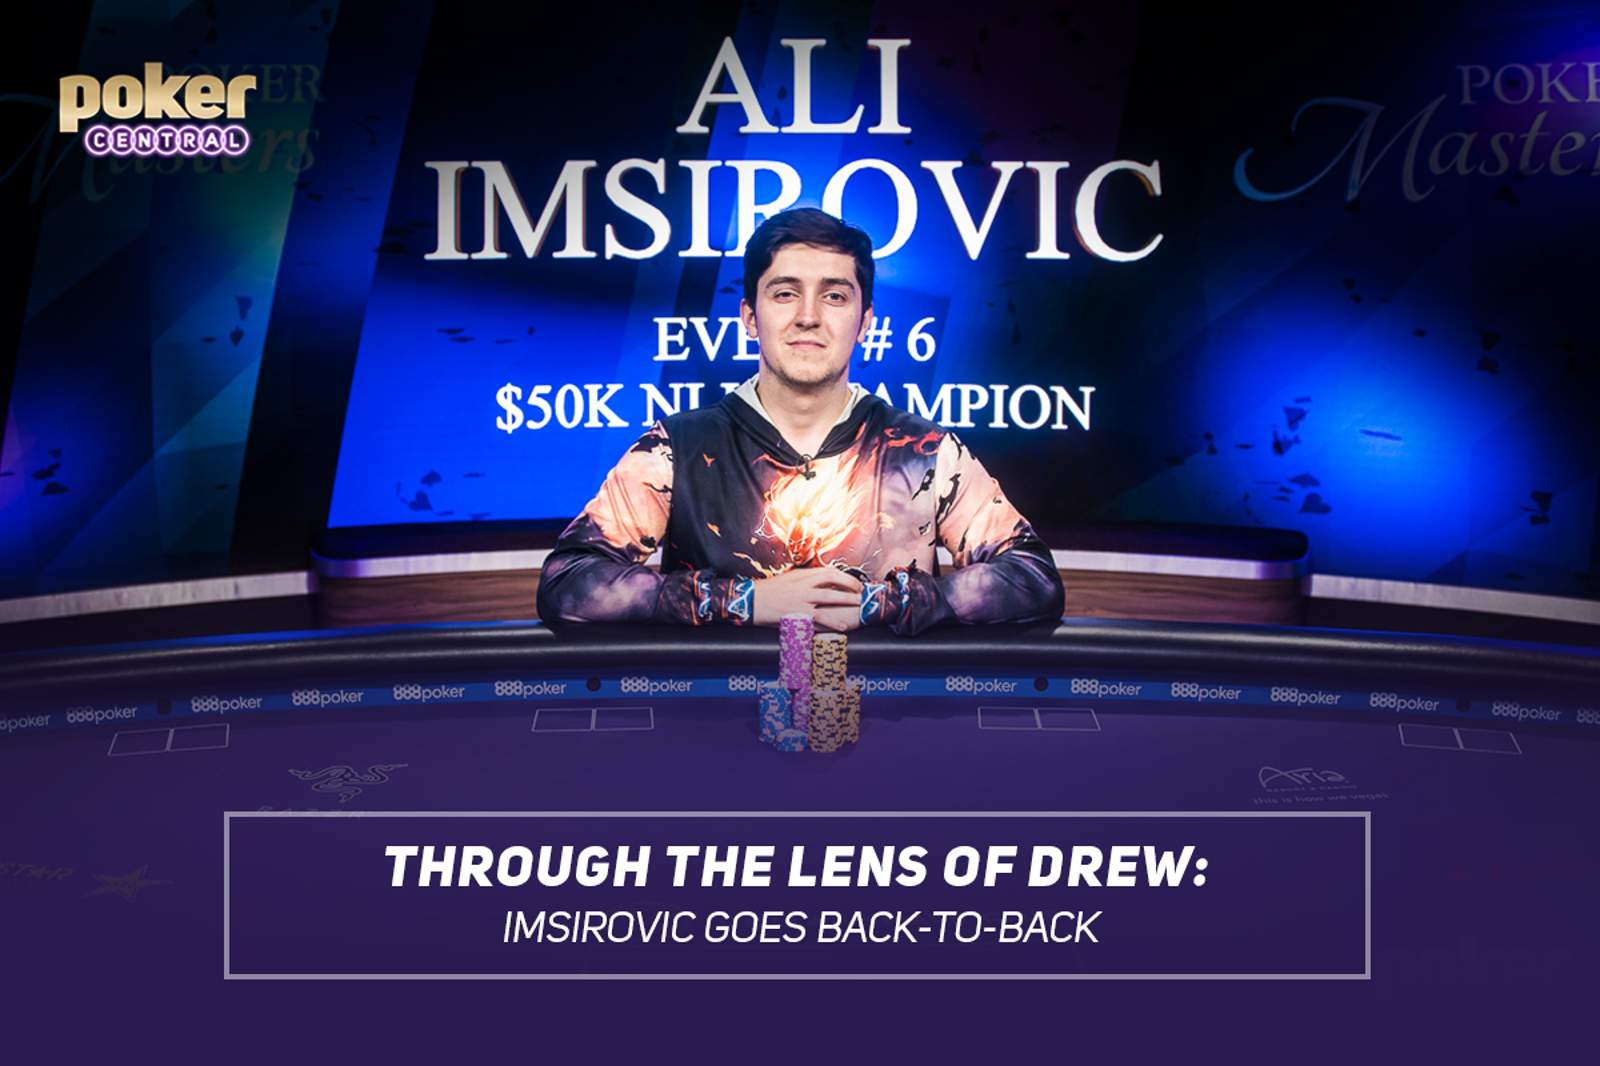 Through The Lens of Drew - Imsirovic Goes Back-to-Back